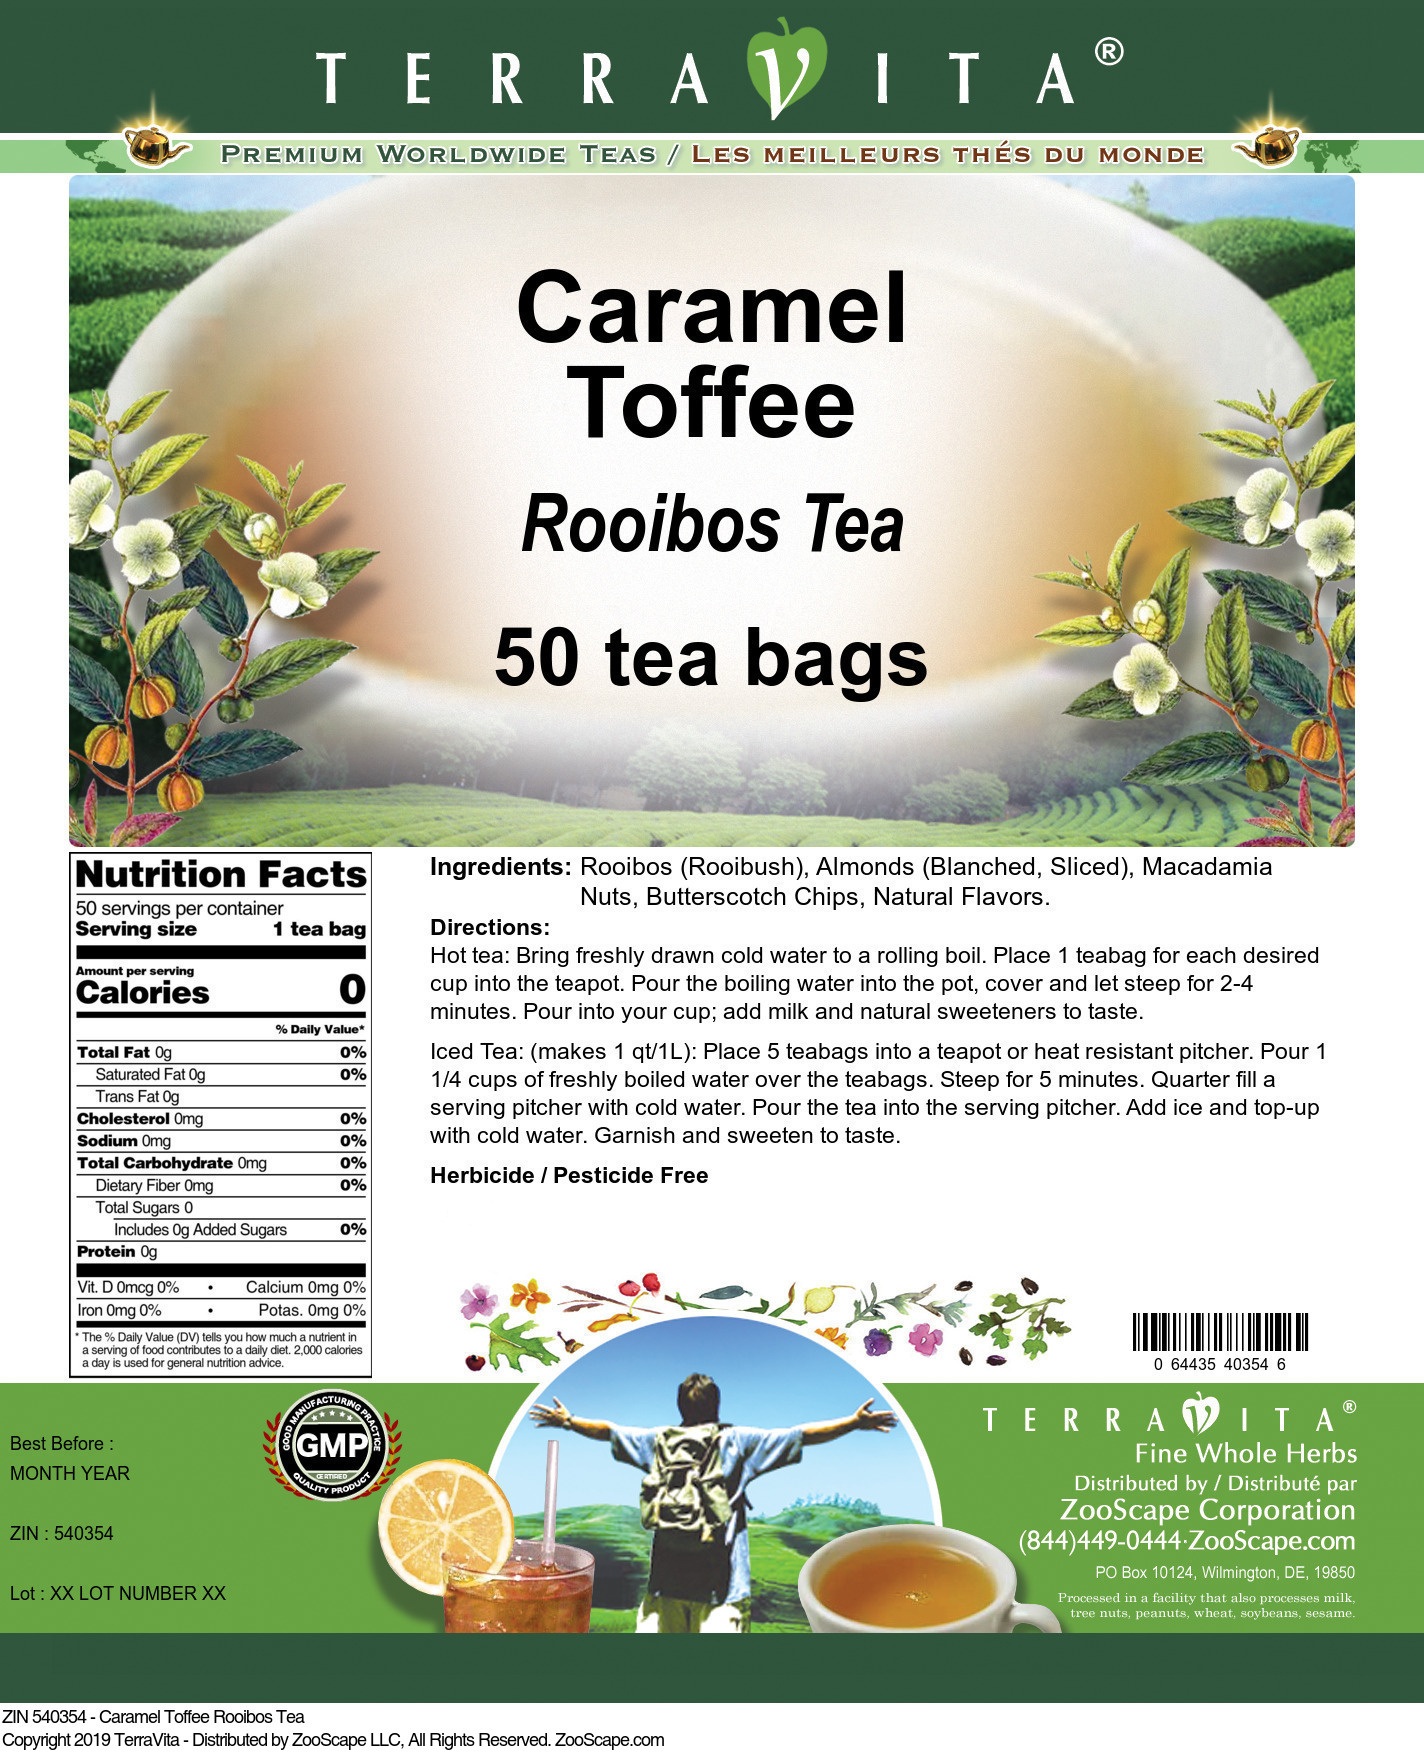 Caramel Toffee Rooibos Tea - Label